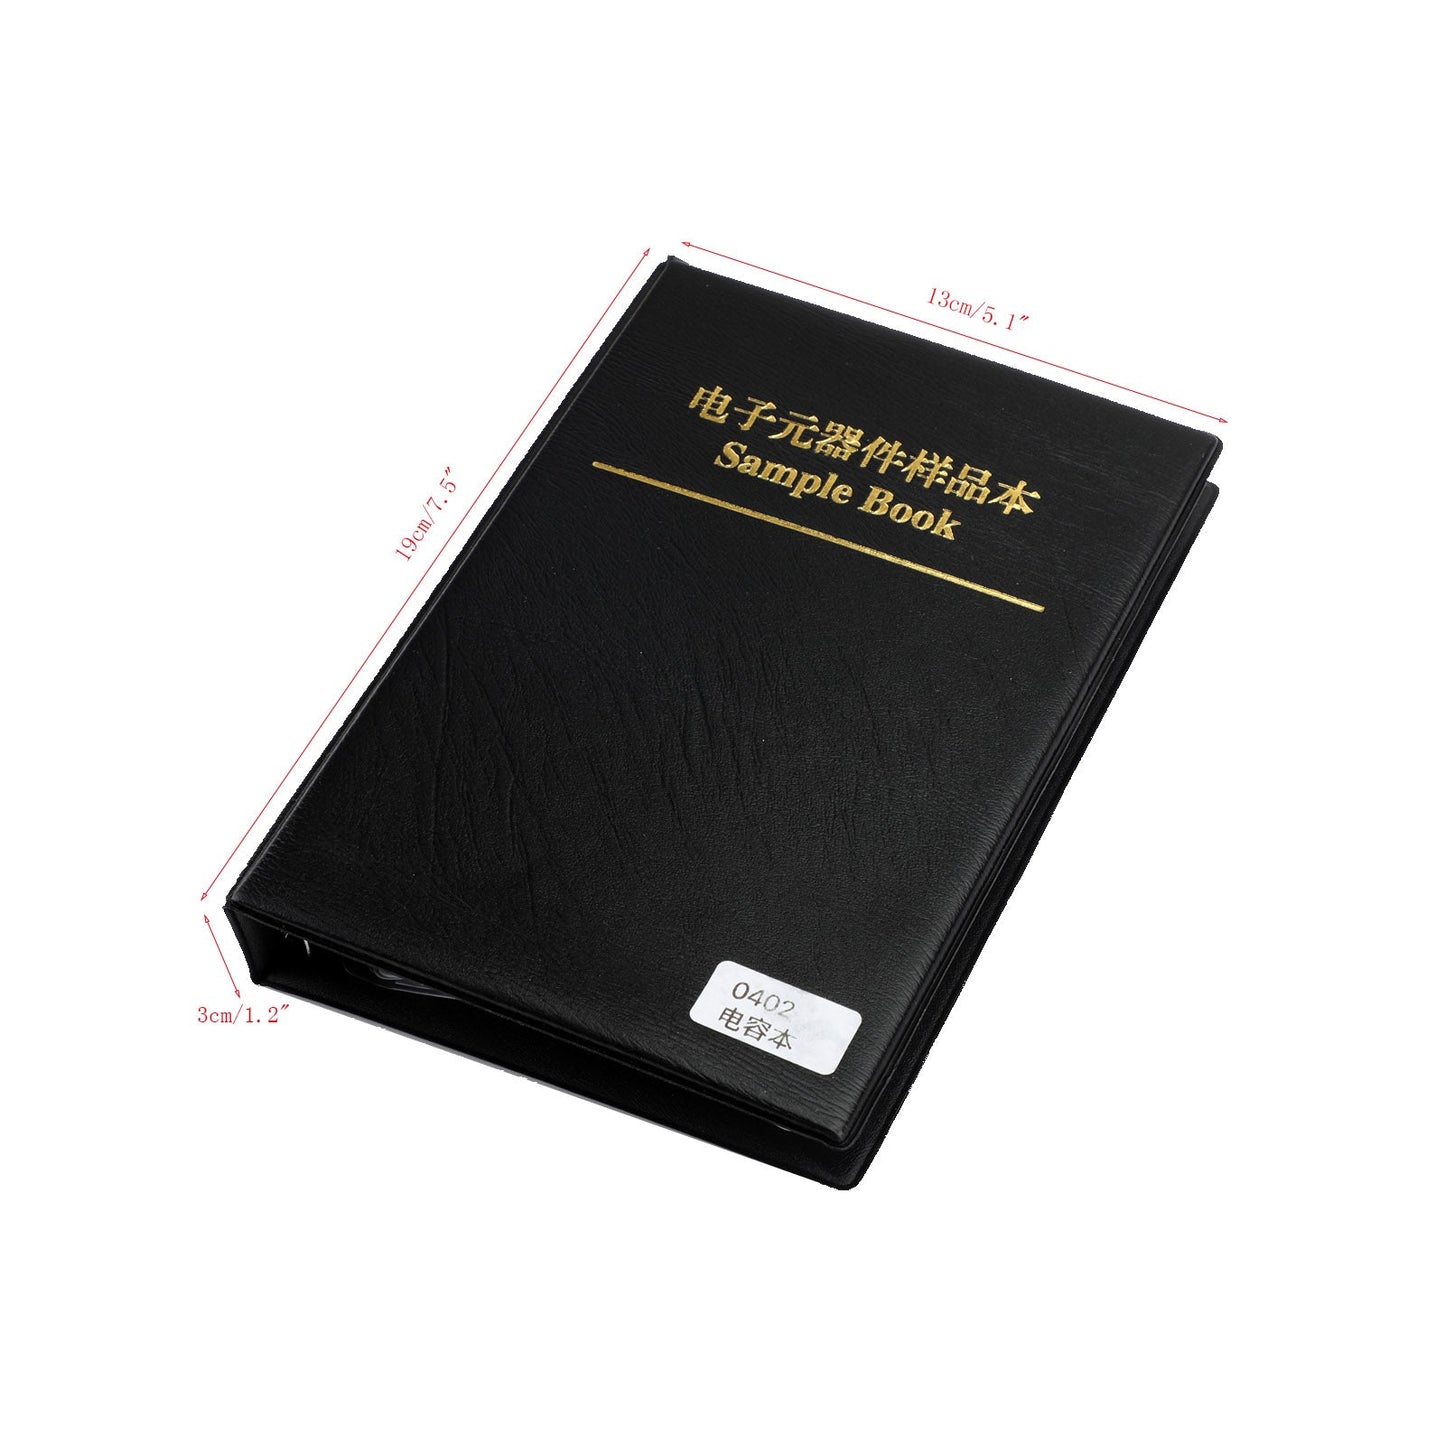 SMD0402 Capacitor sample book 80 values * 50pcs=4000pcs Capacitor kit SMD